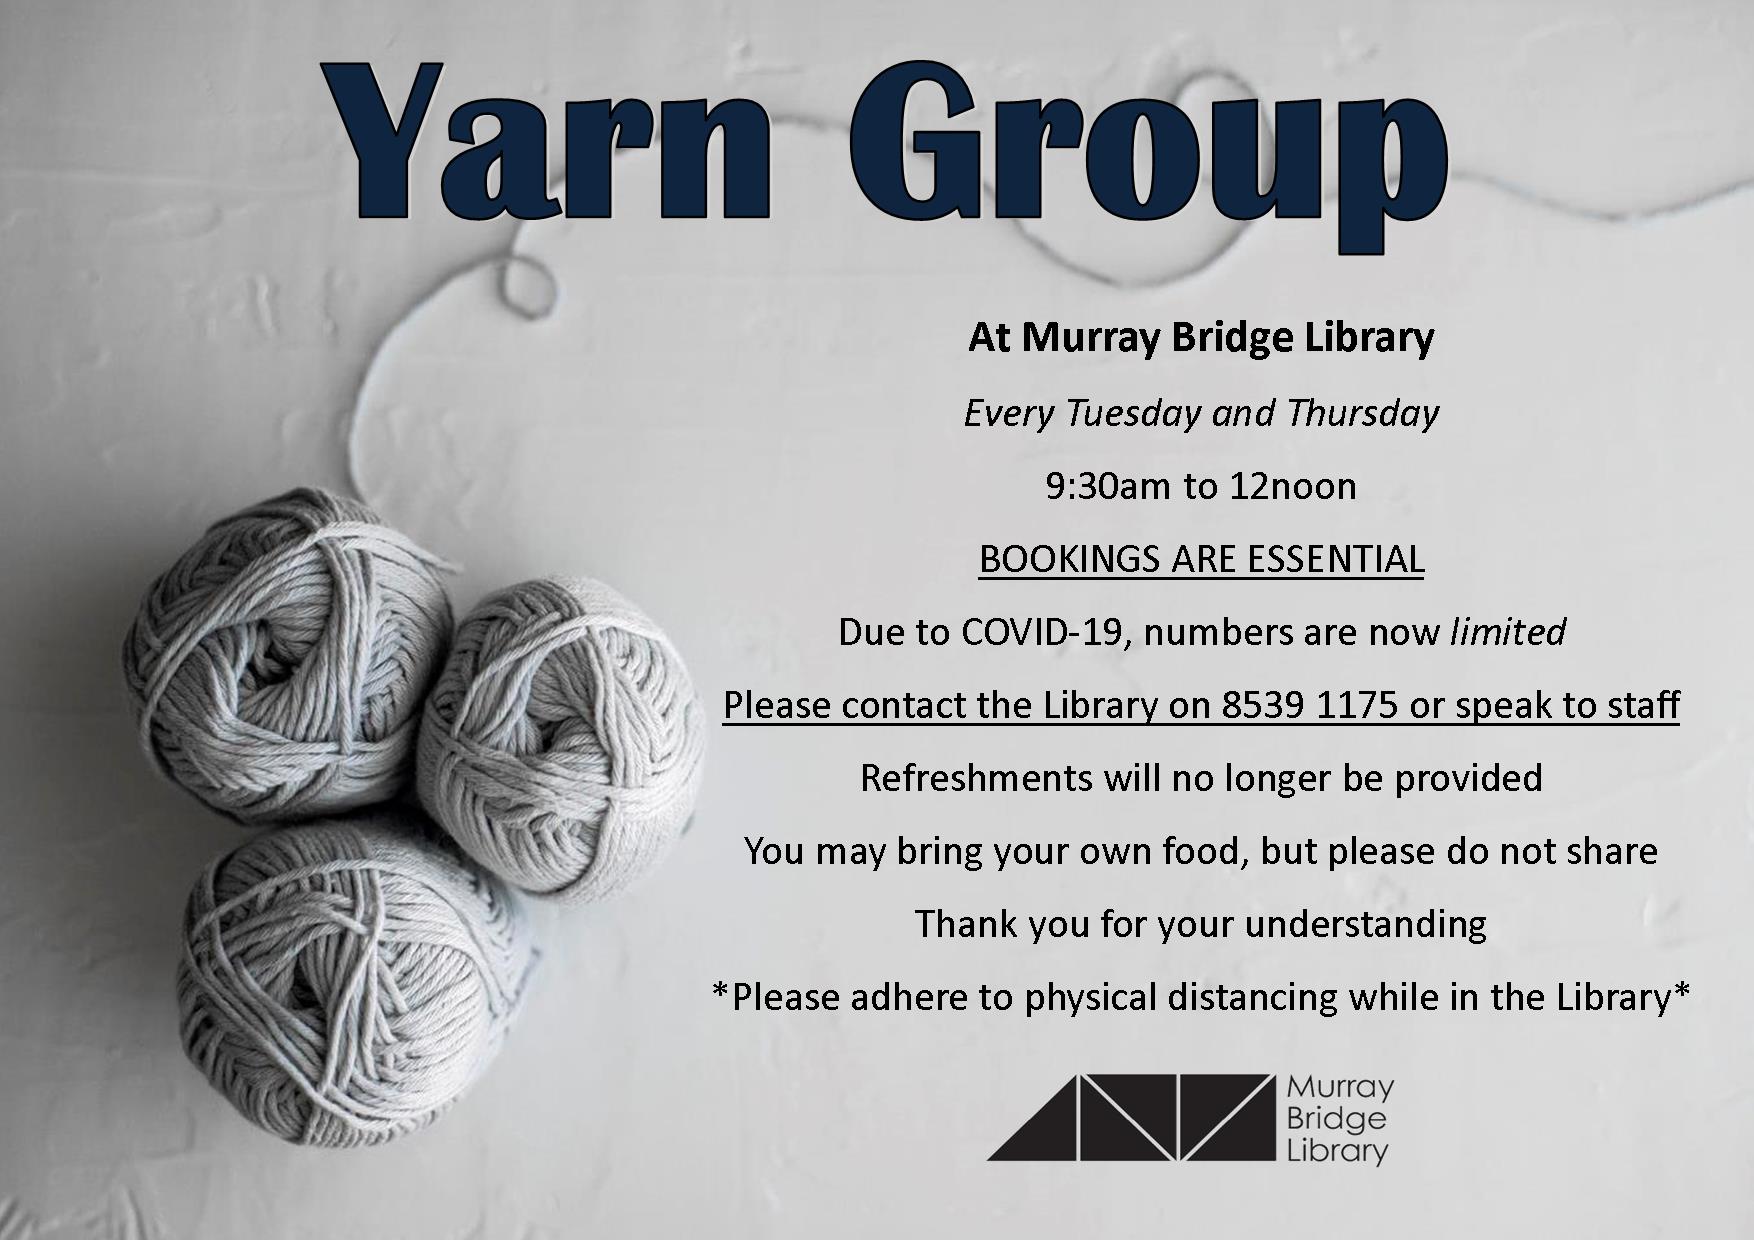 Yarn Group at the Library